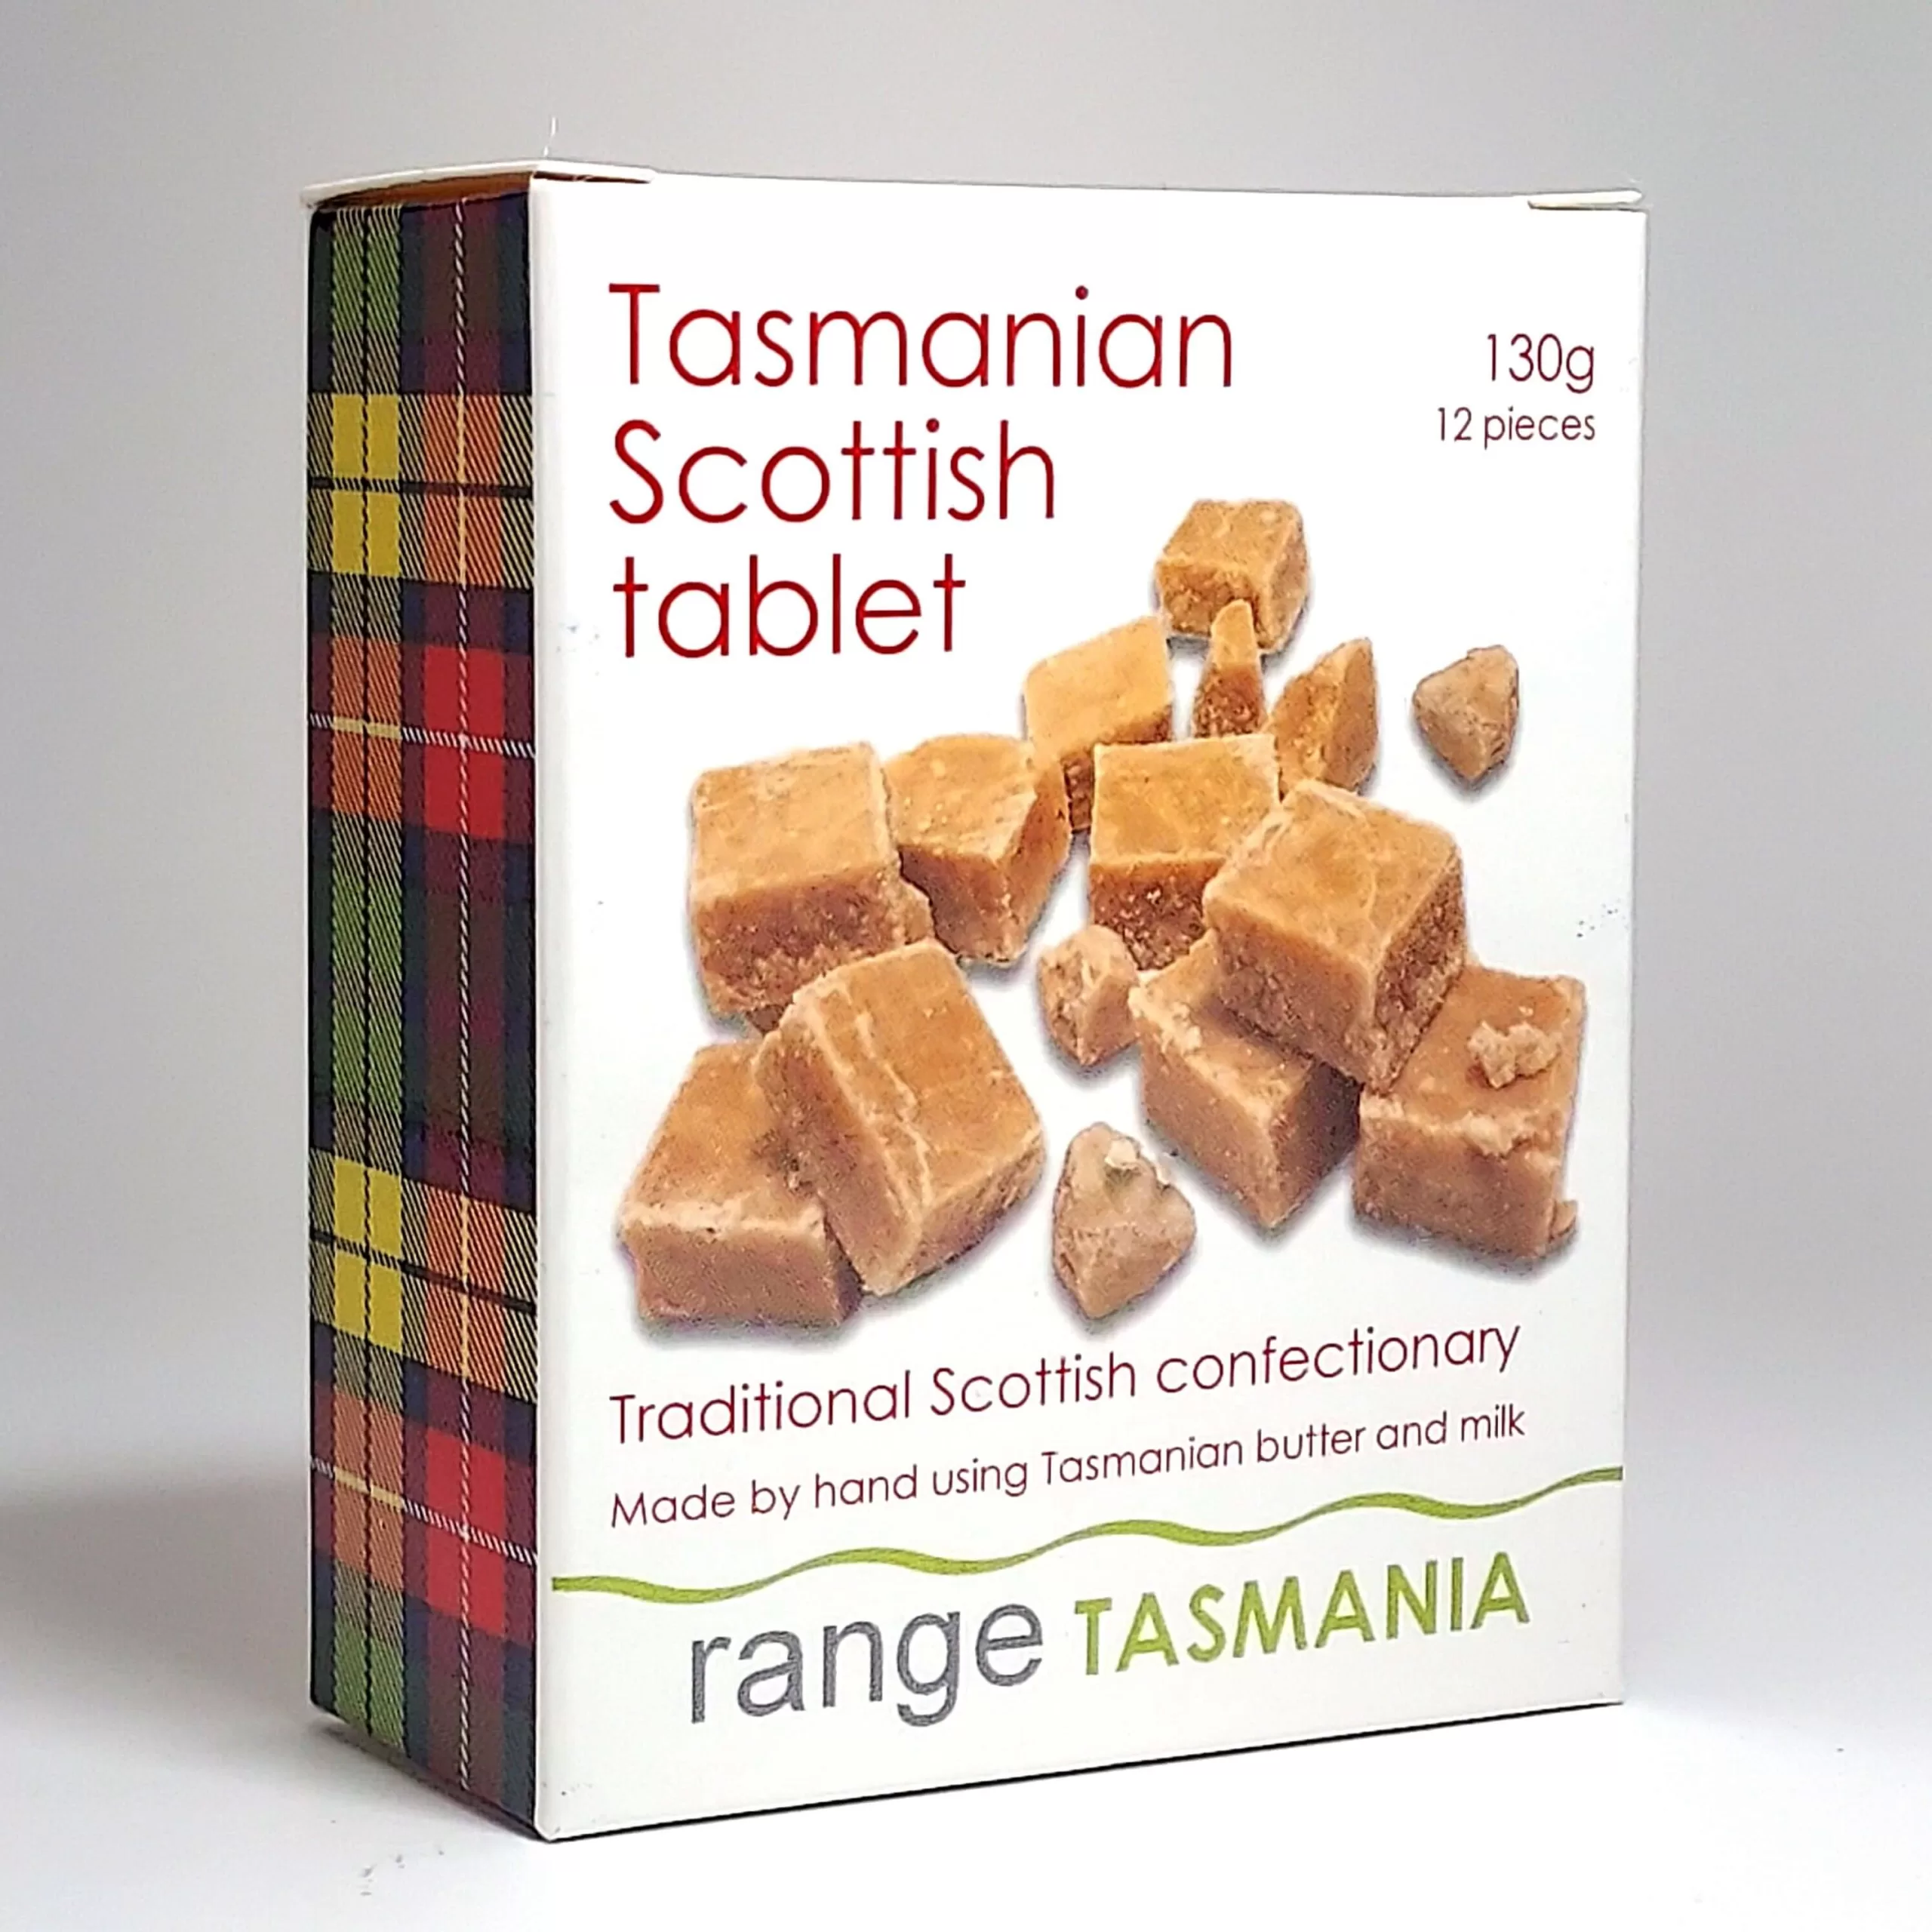 Tasmanian Scottish Tablet, Range Tasmania